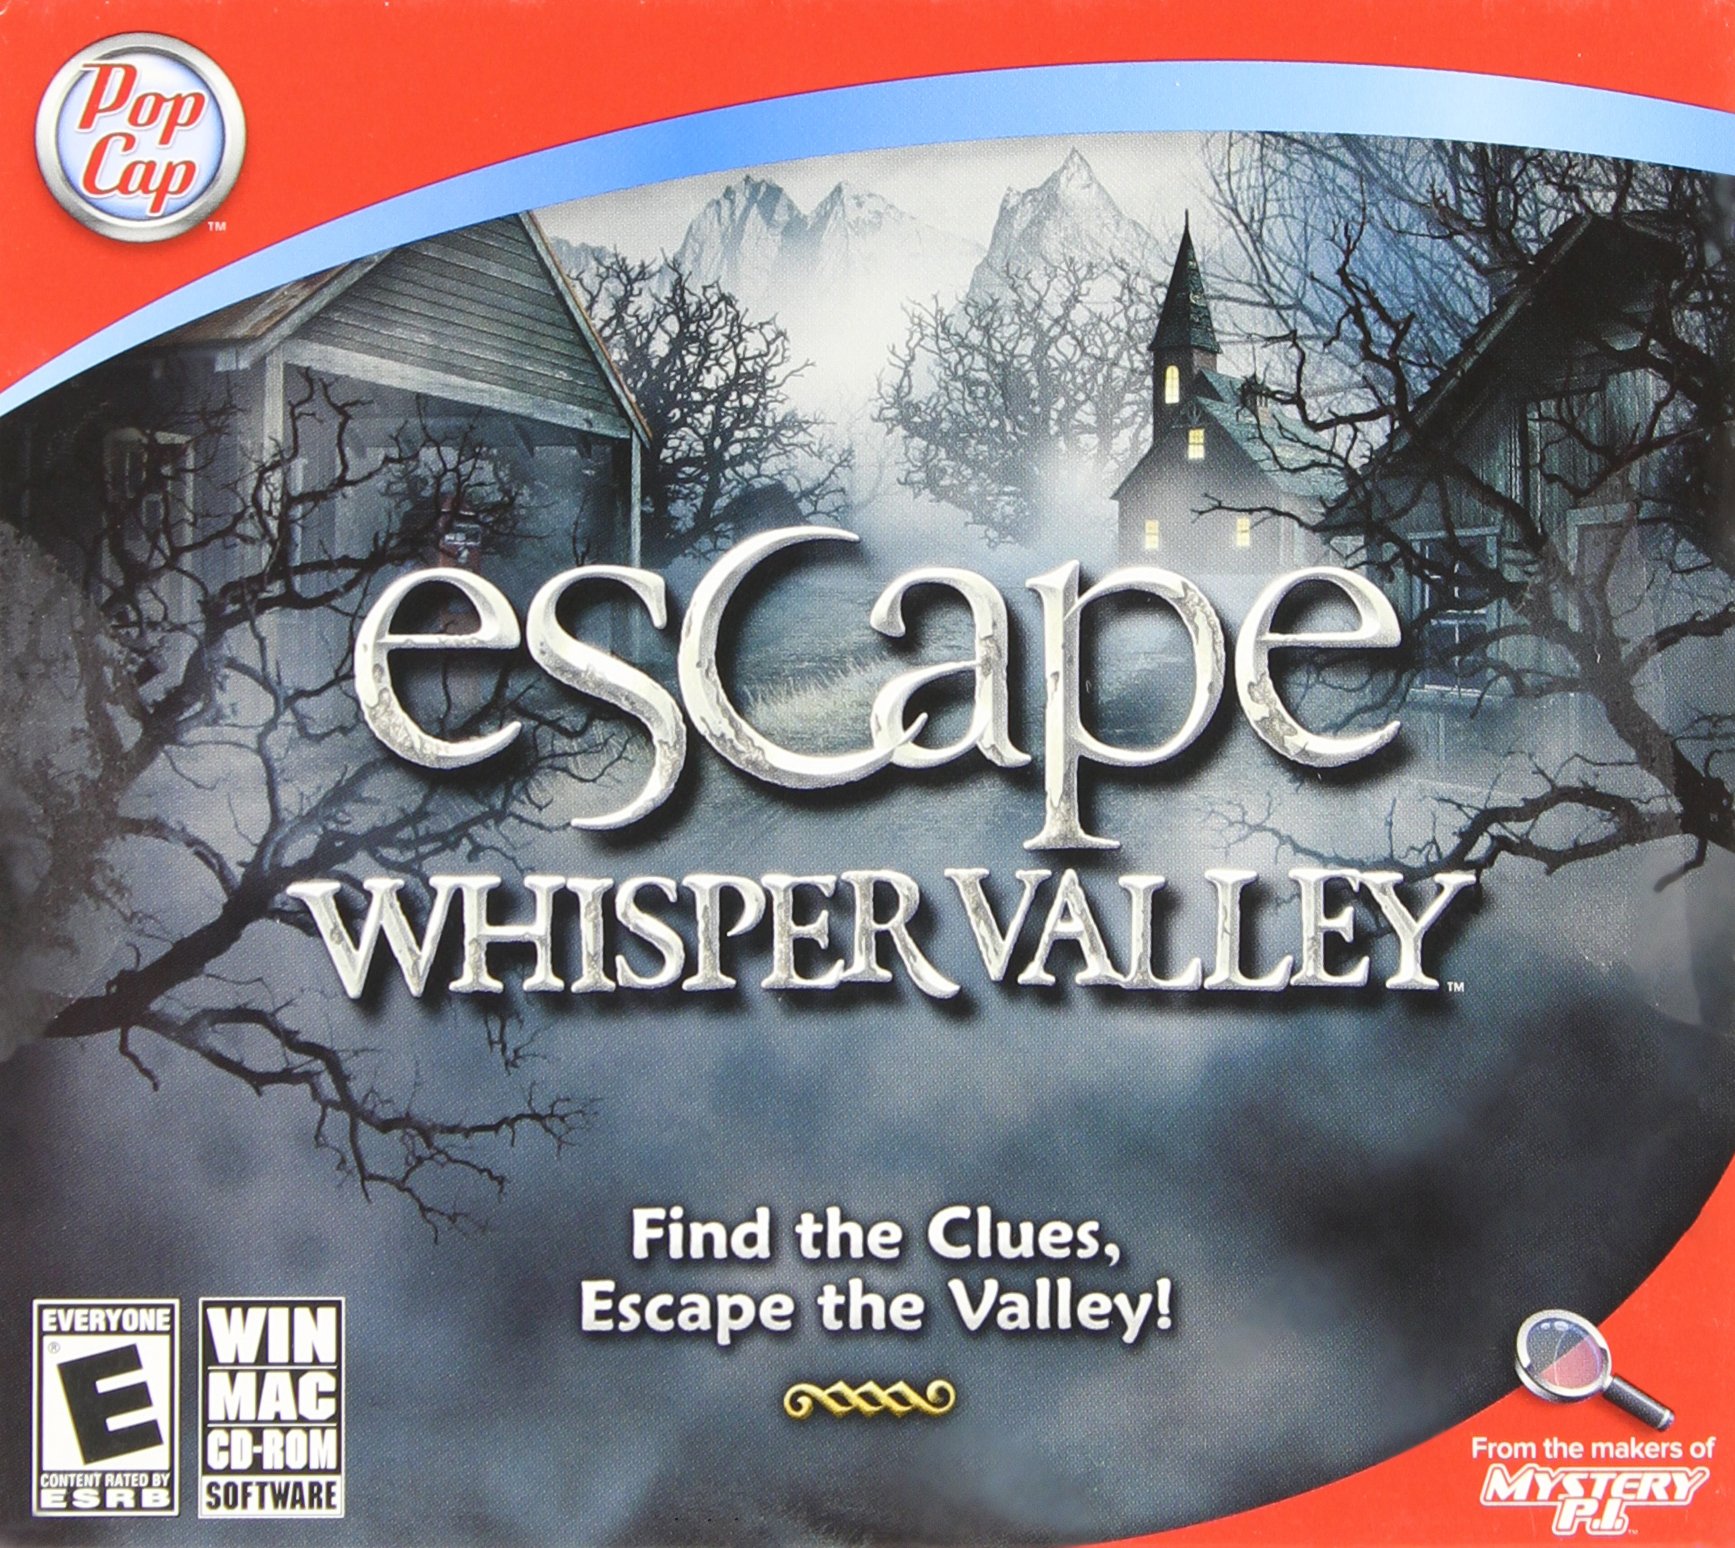 Escape Whisper Valley- PC and Mac compatible